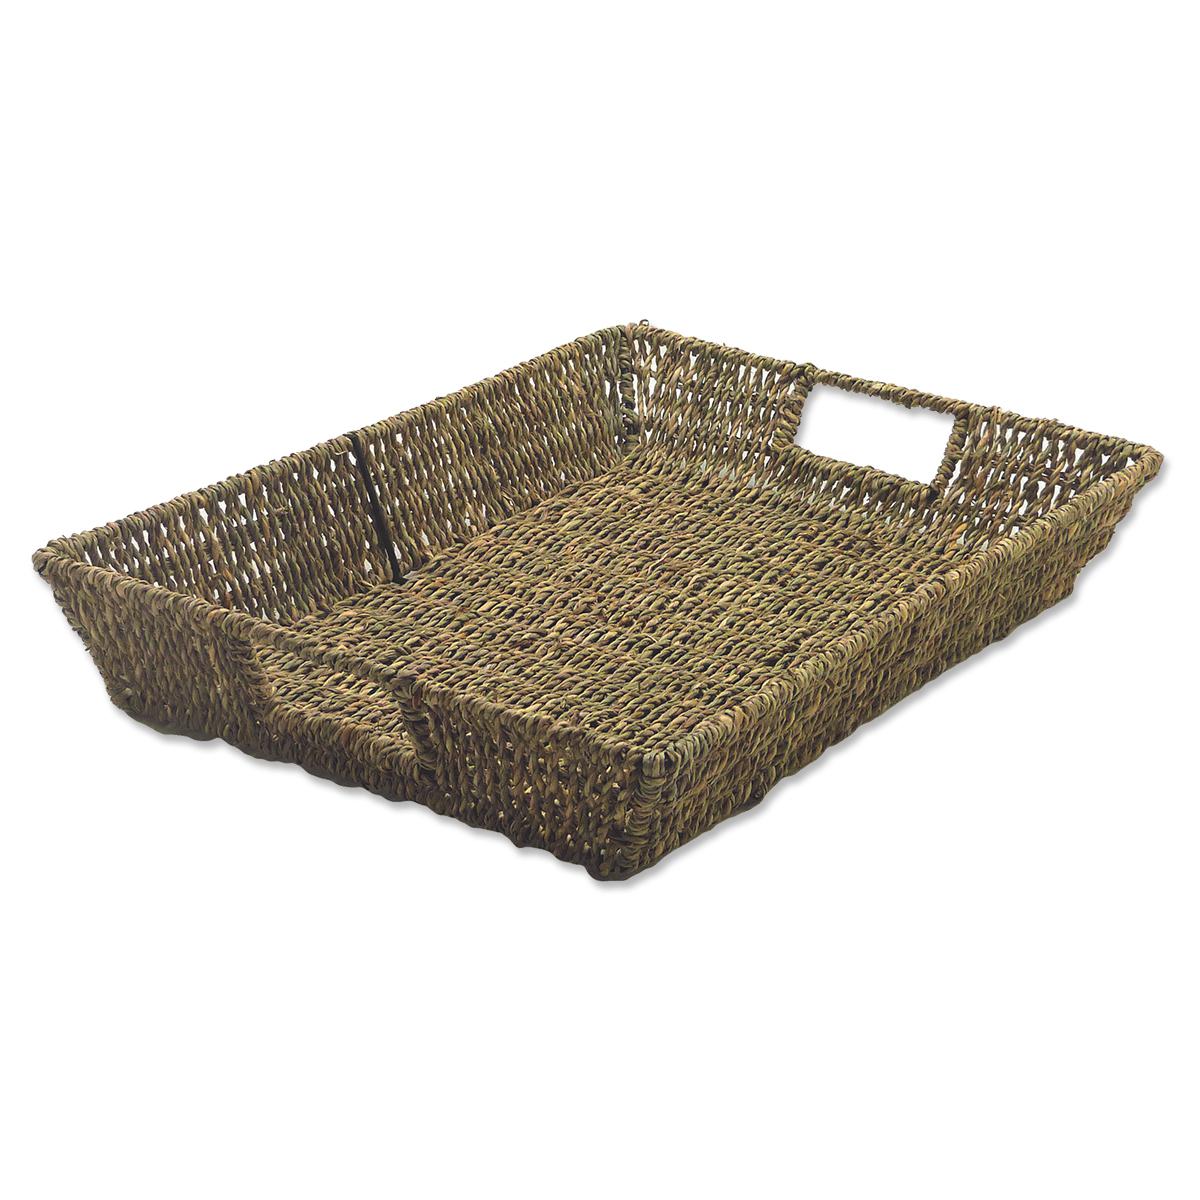  Natural Seagrass Basket 